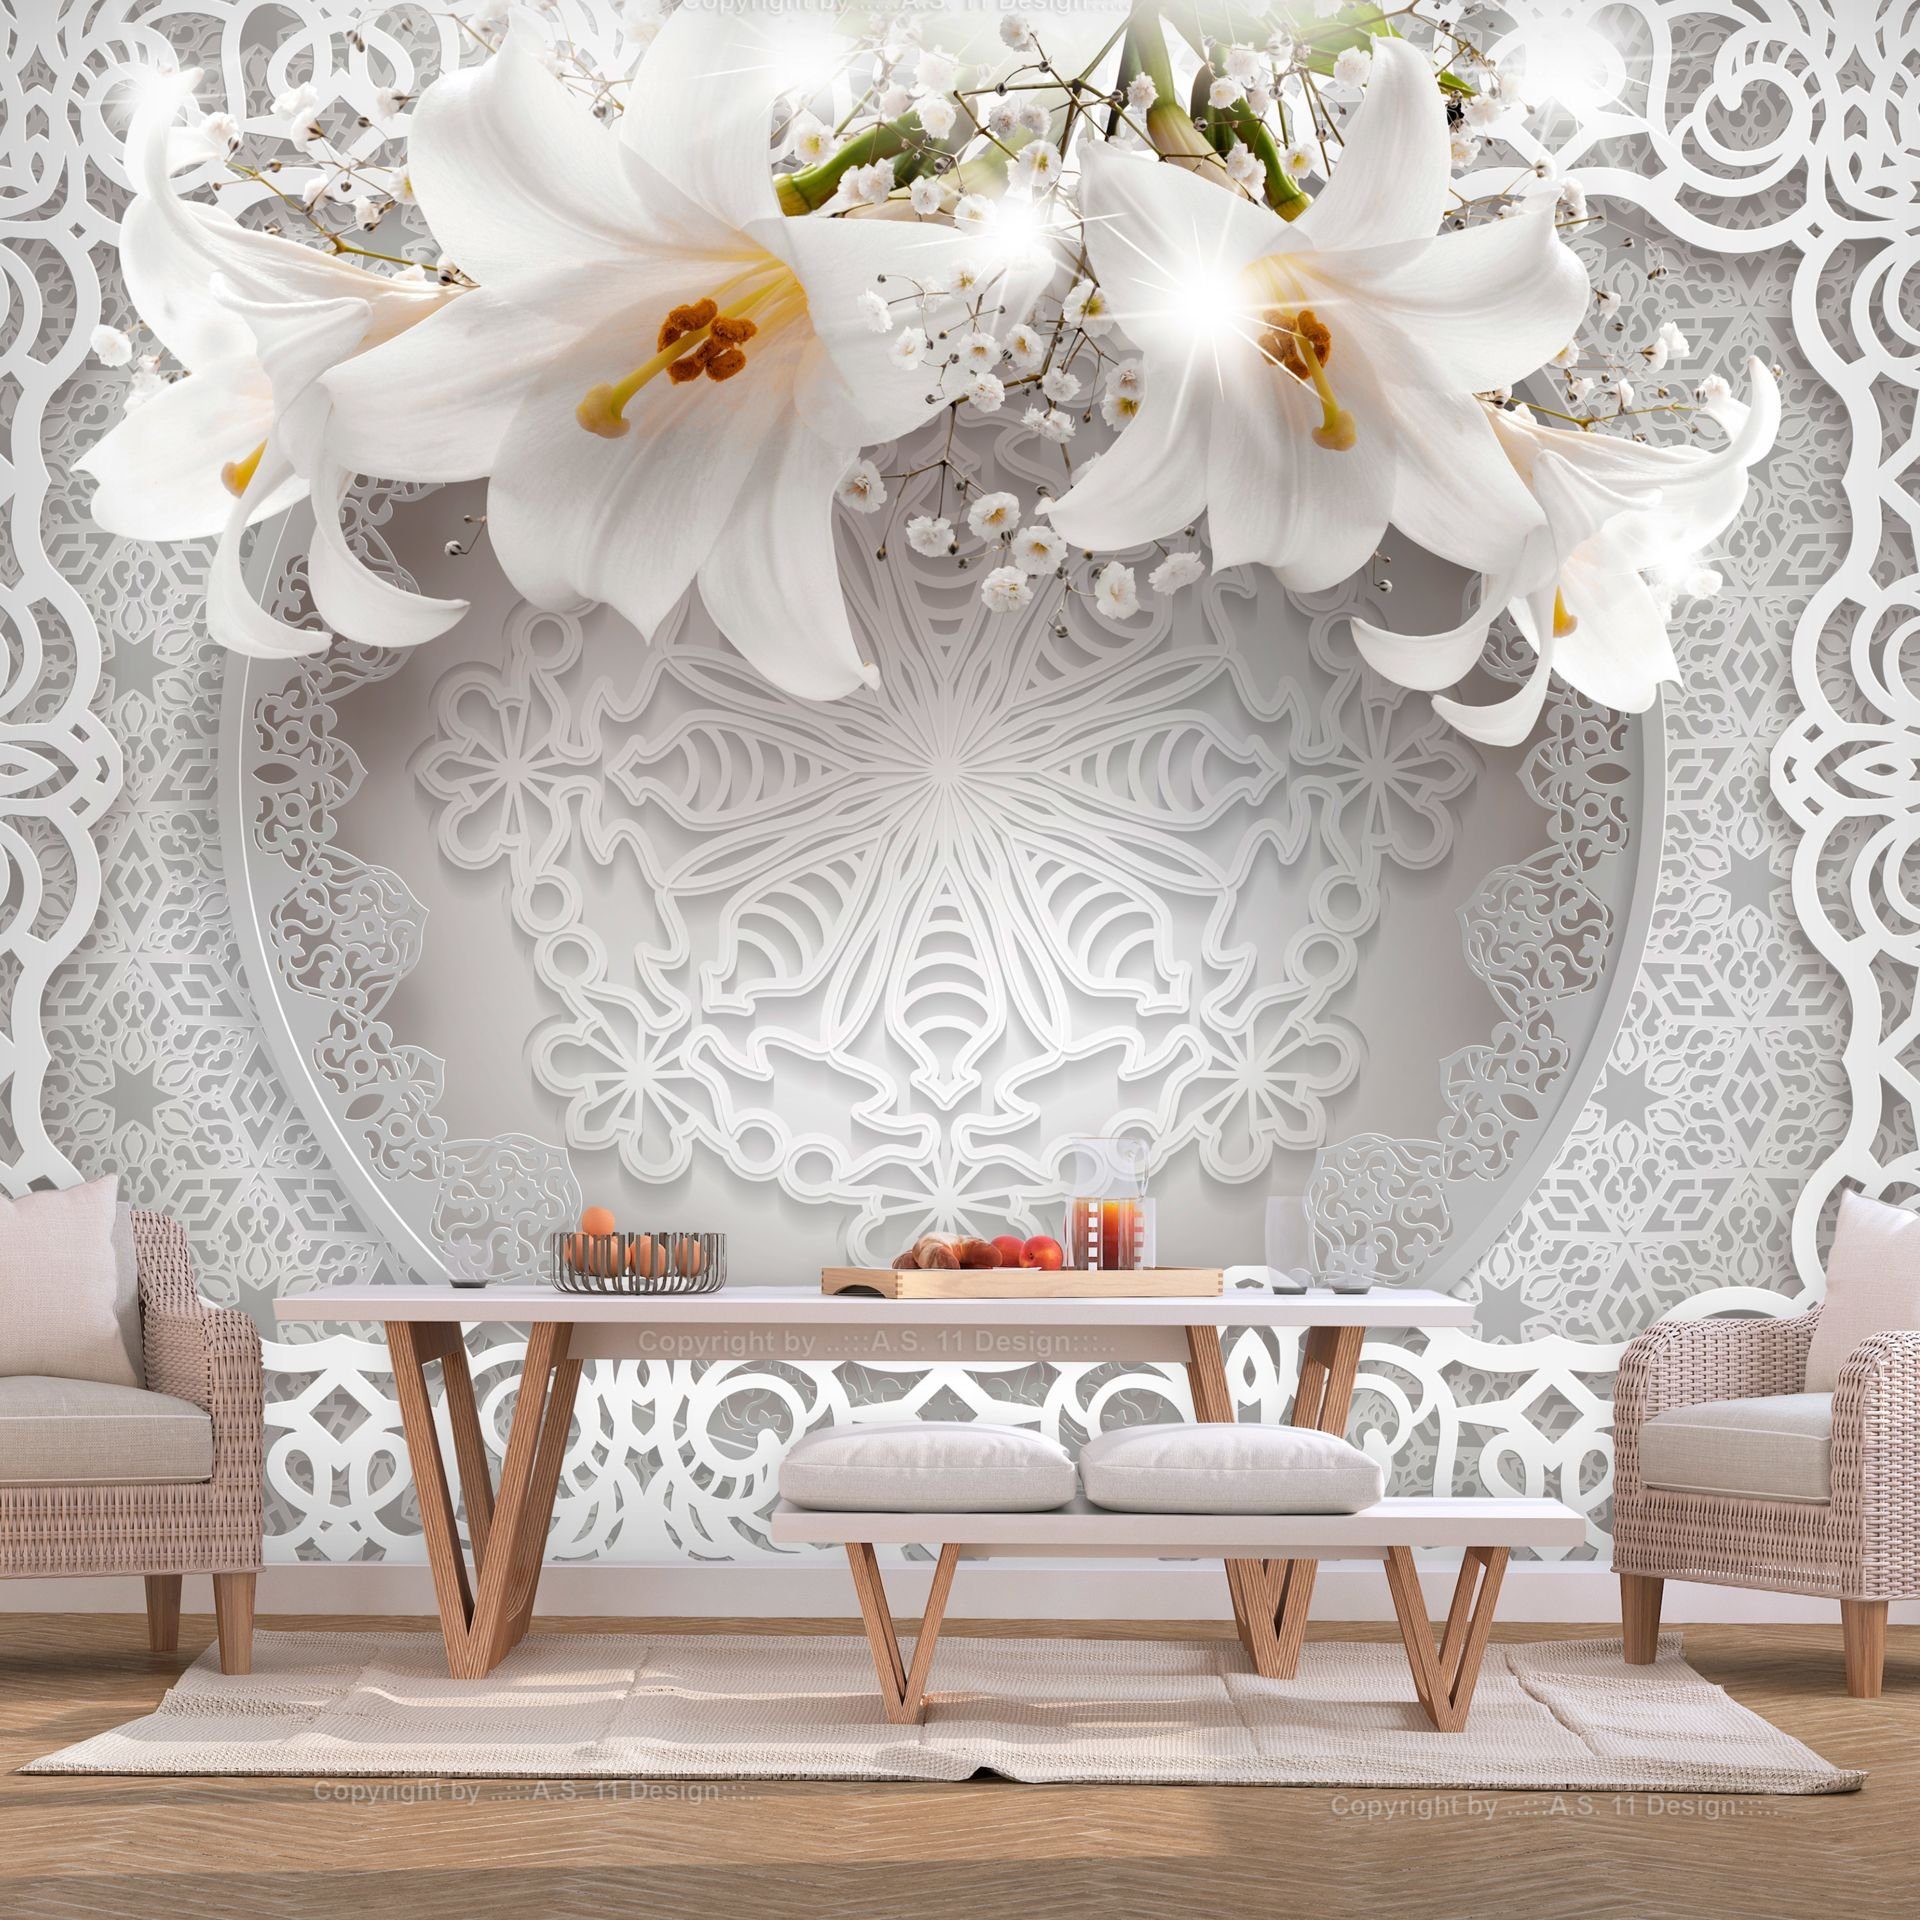 KUNSTLOFT Vliestapete Lilies and Ornaments 0.98x0.7 m, halb-matt, matt, lichtbeständige Design Tapete